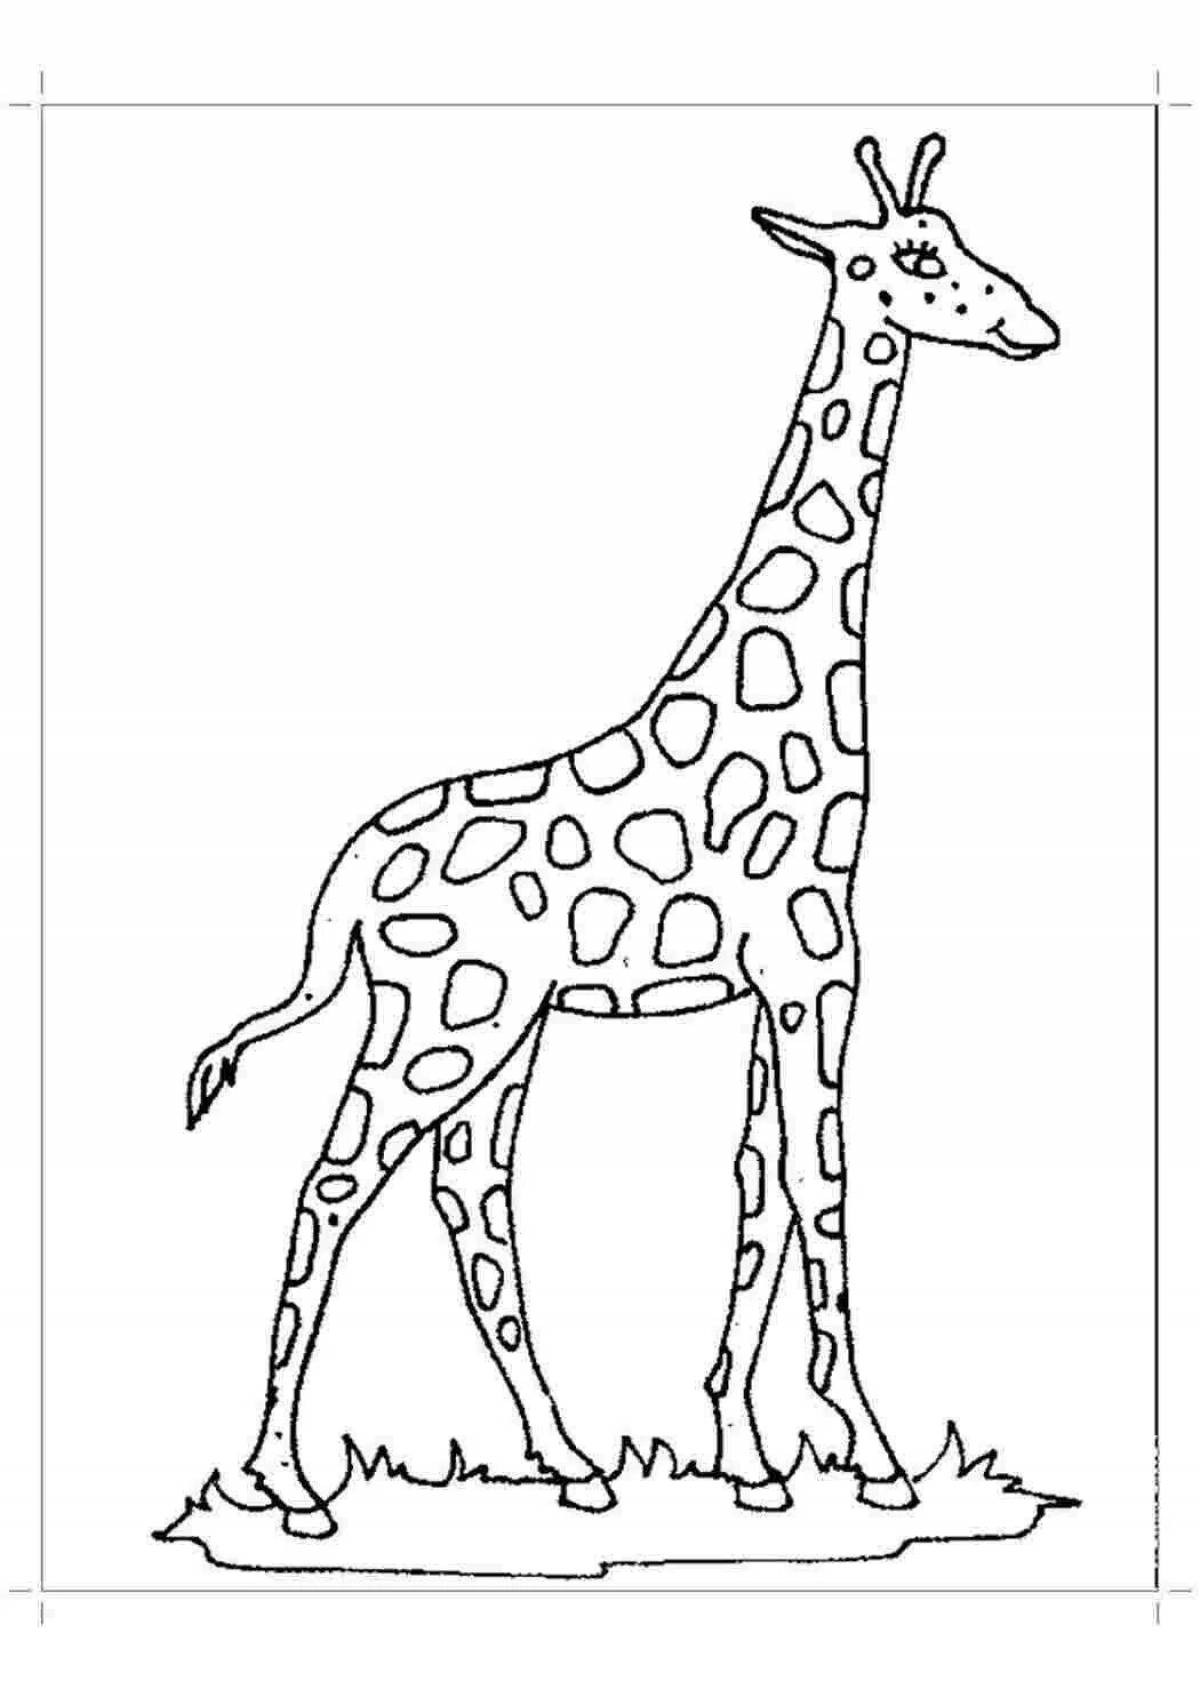 Shining giraffe without spots for children